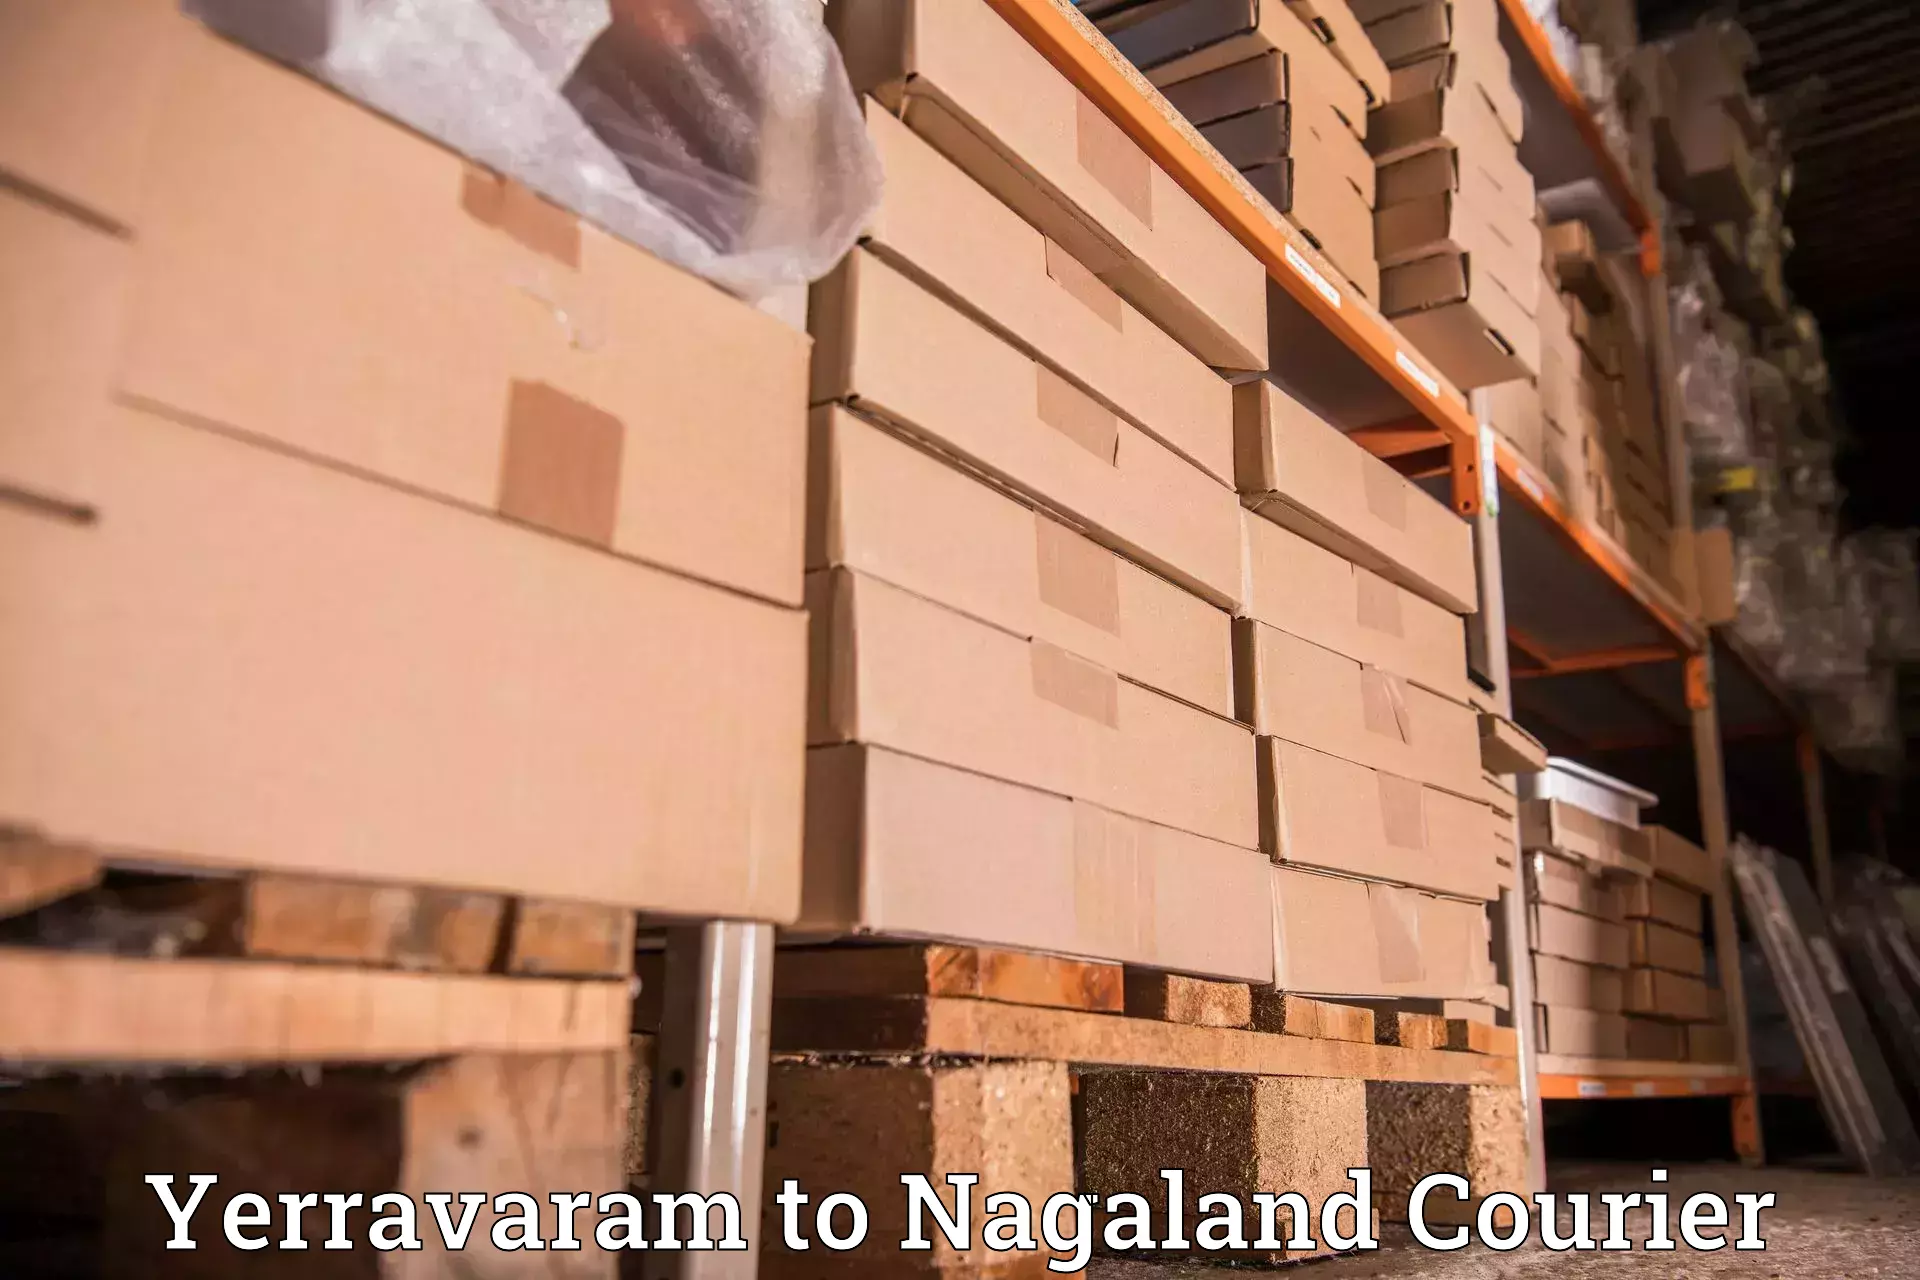 Quick dispatch service Yerravaram to Nagaland